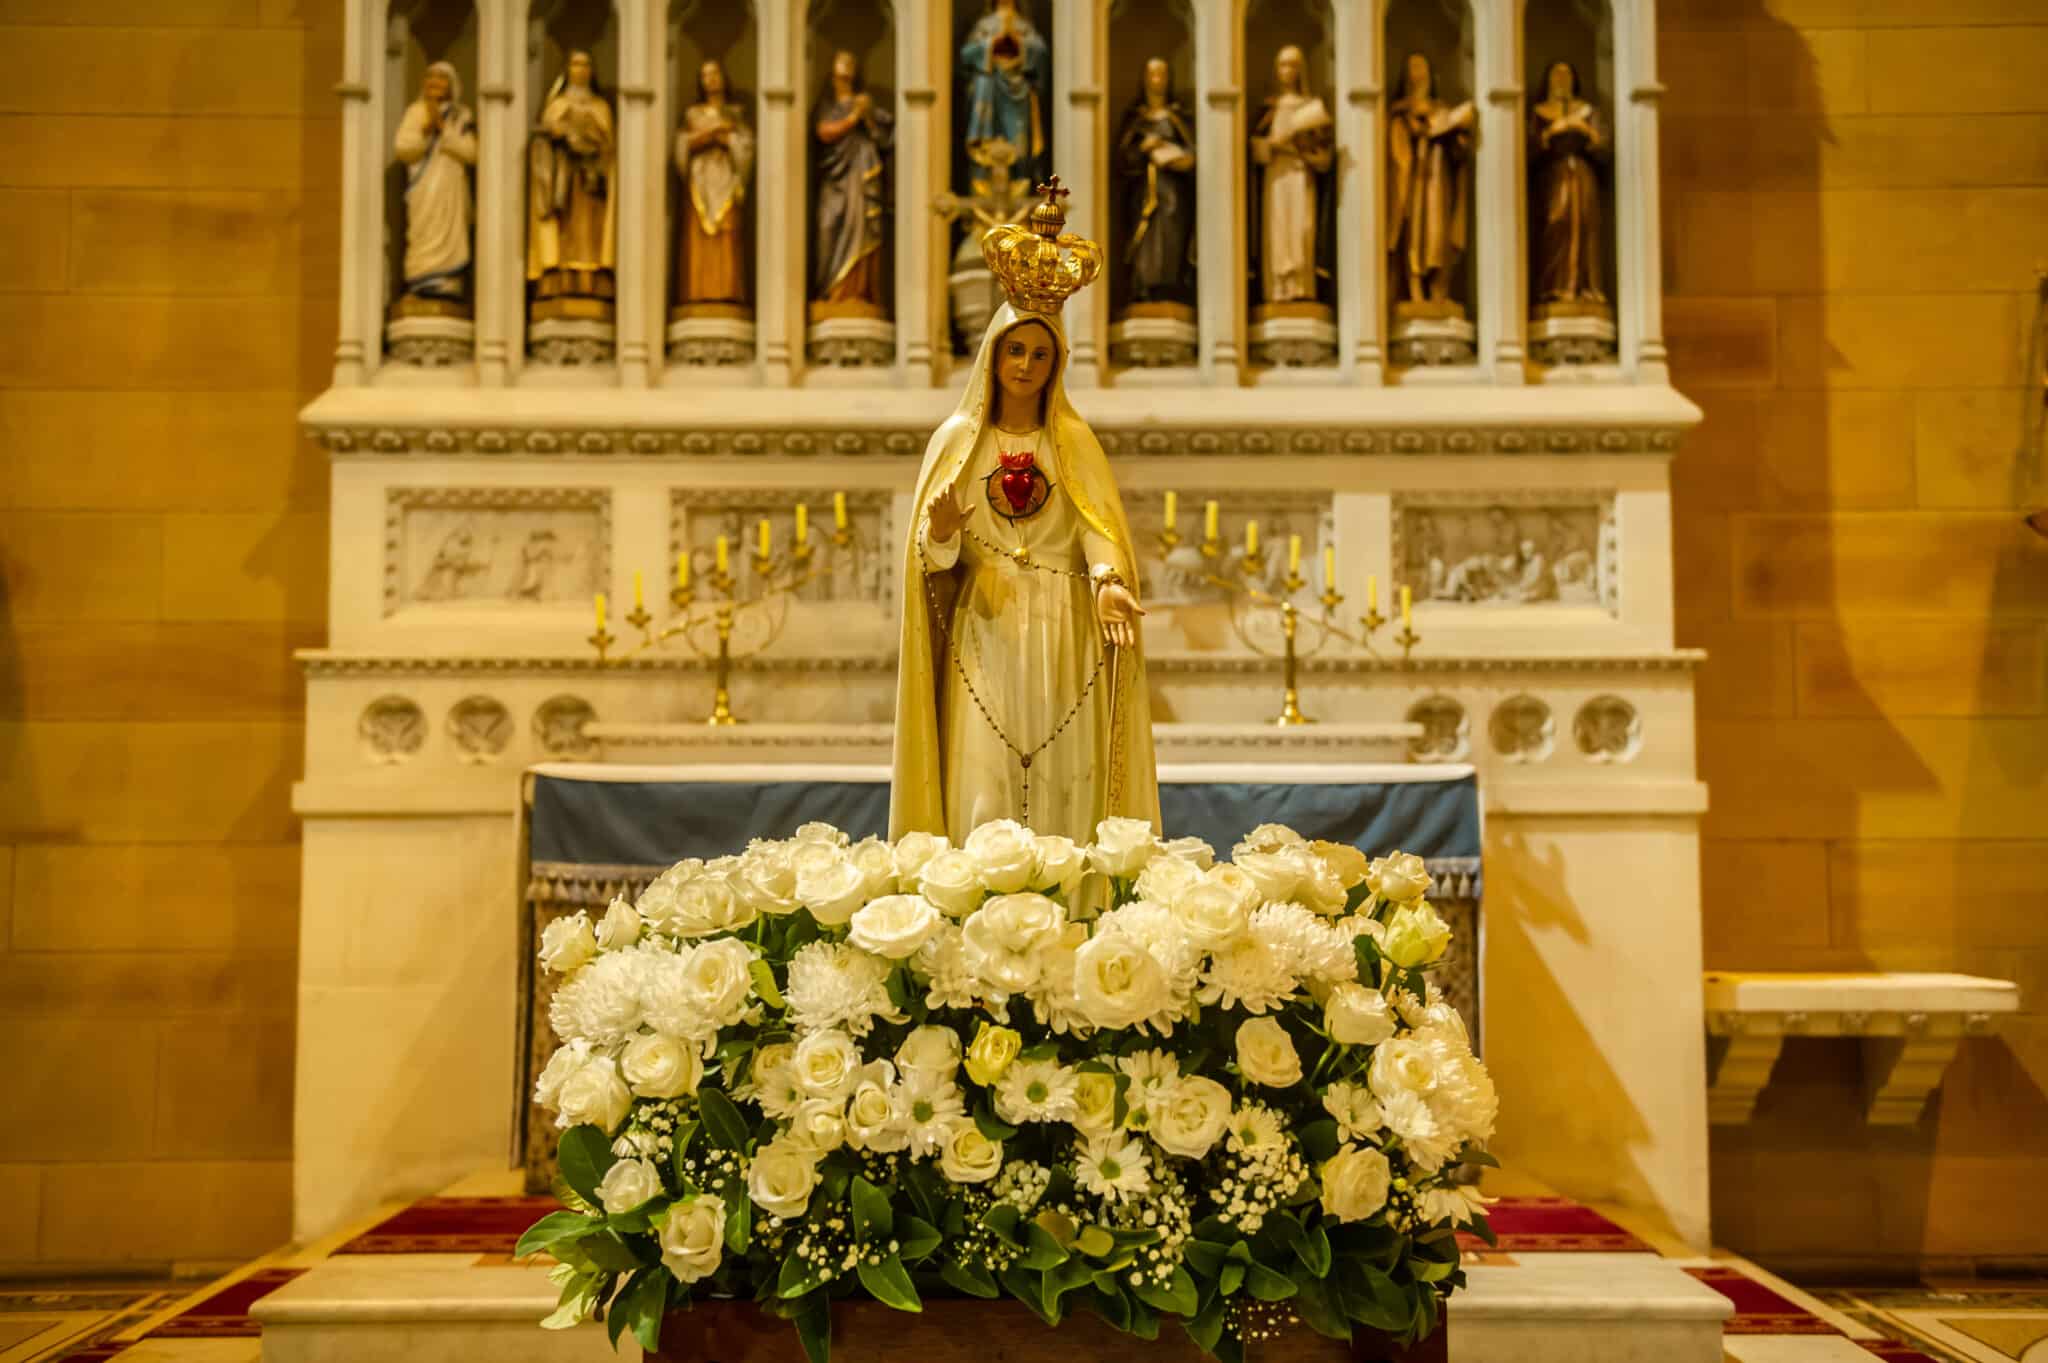 Our Lady of Fatima procession invites faithful to share the flame  